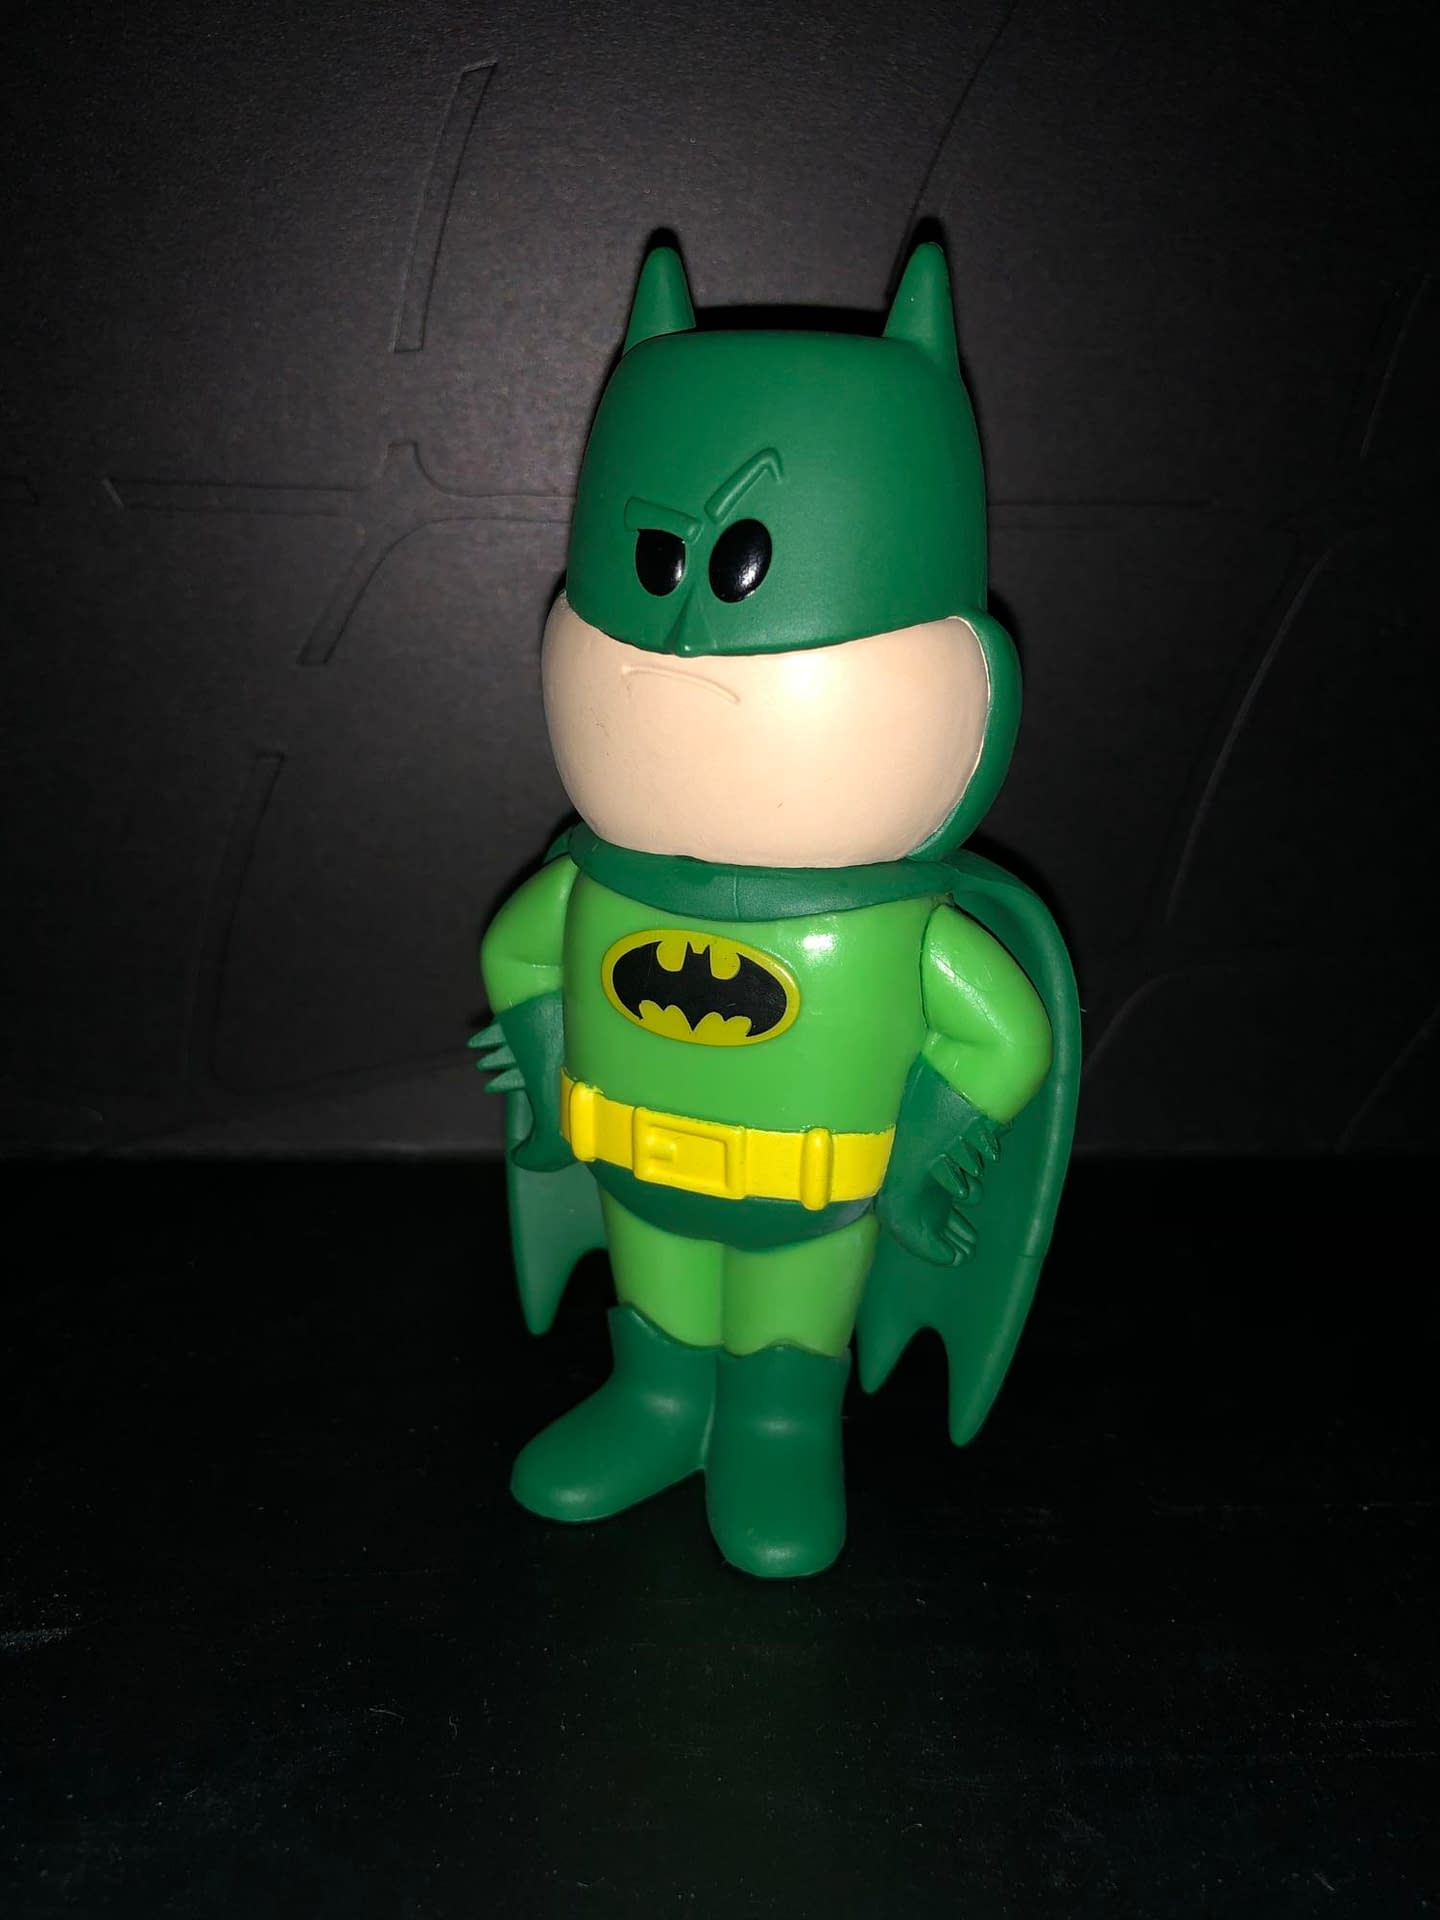 Funko Soda Vinyl Figure Emerald City Comic Con Exclusive Green Batman Figure, front view of figure.